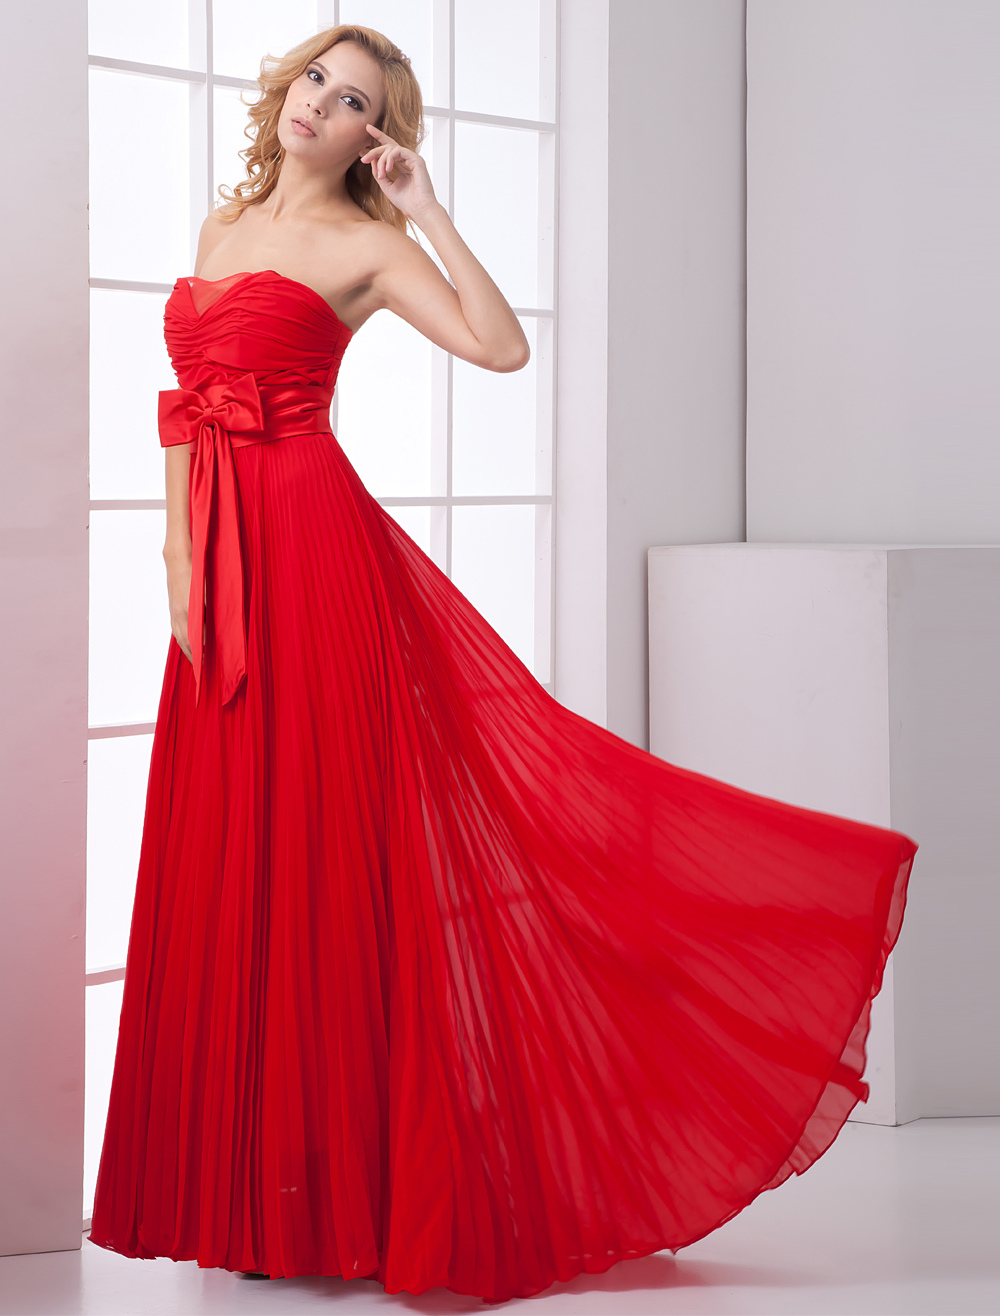 Empire Waist Red Chiffon Bow Sweetheart Women's Prom Dress (Wedding Prom Dresses) photo